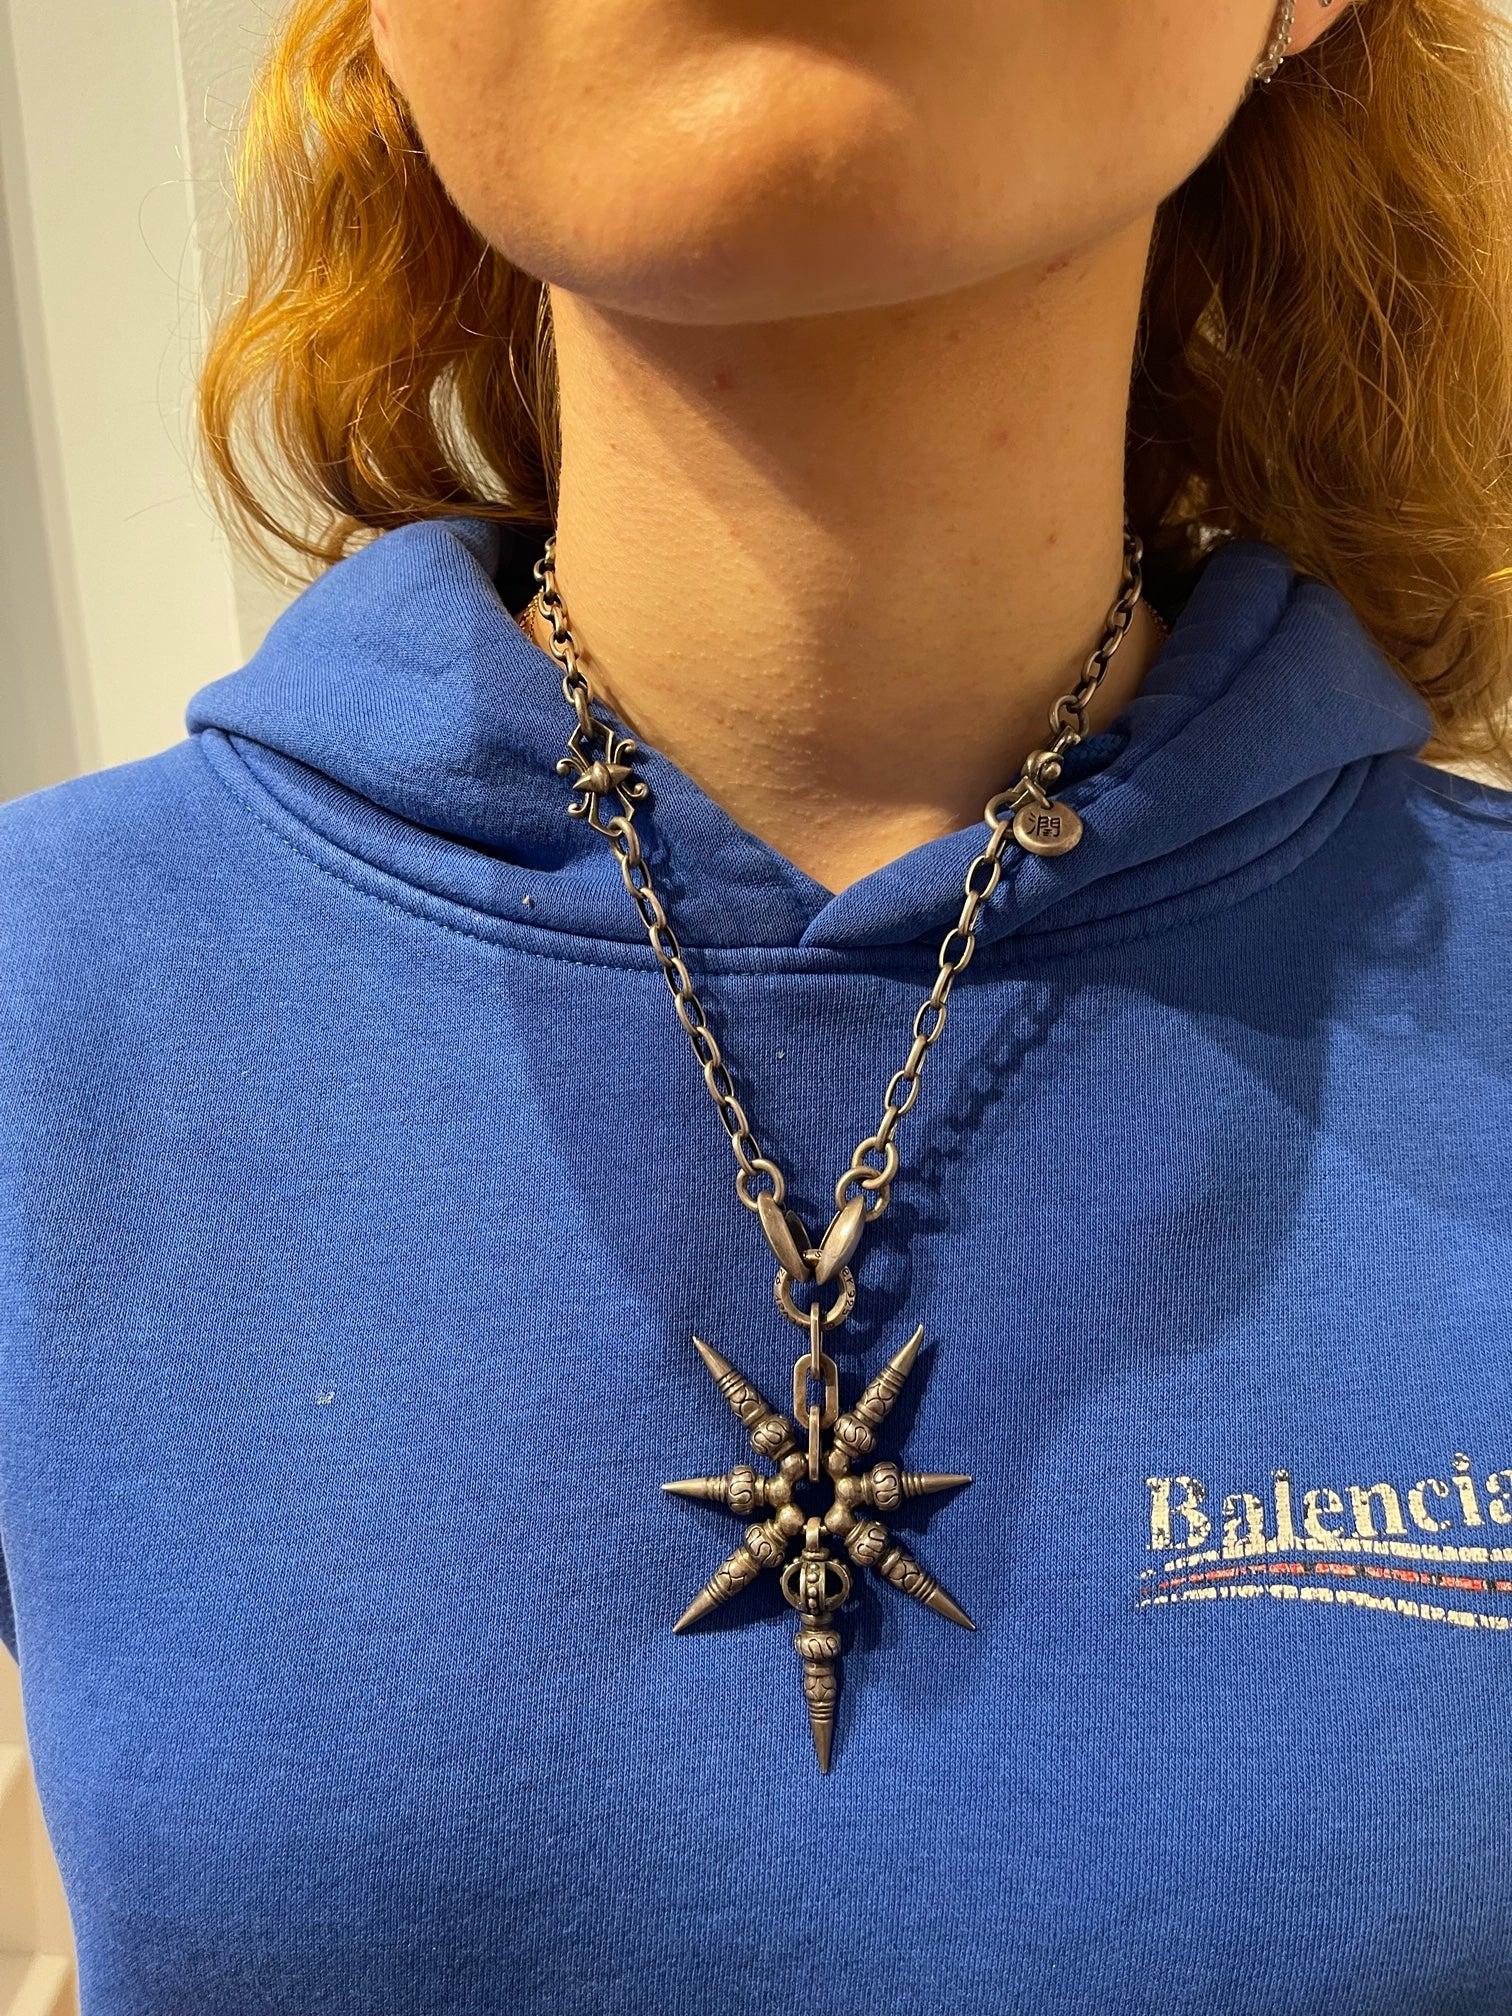 ninja necklace